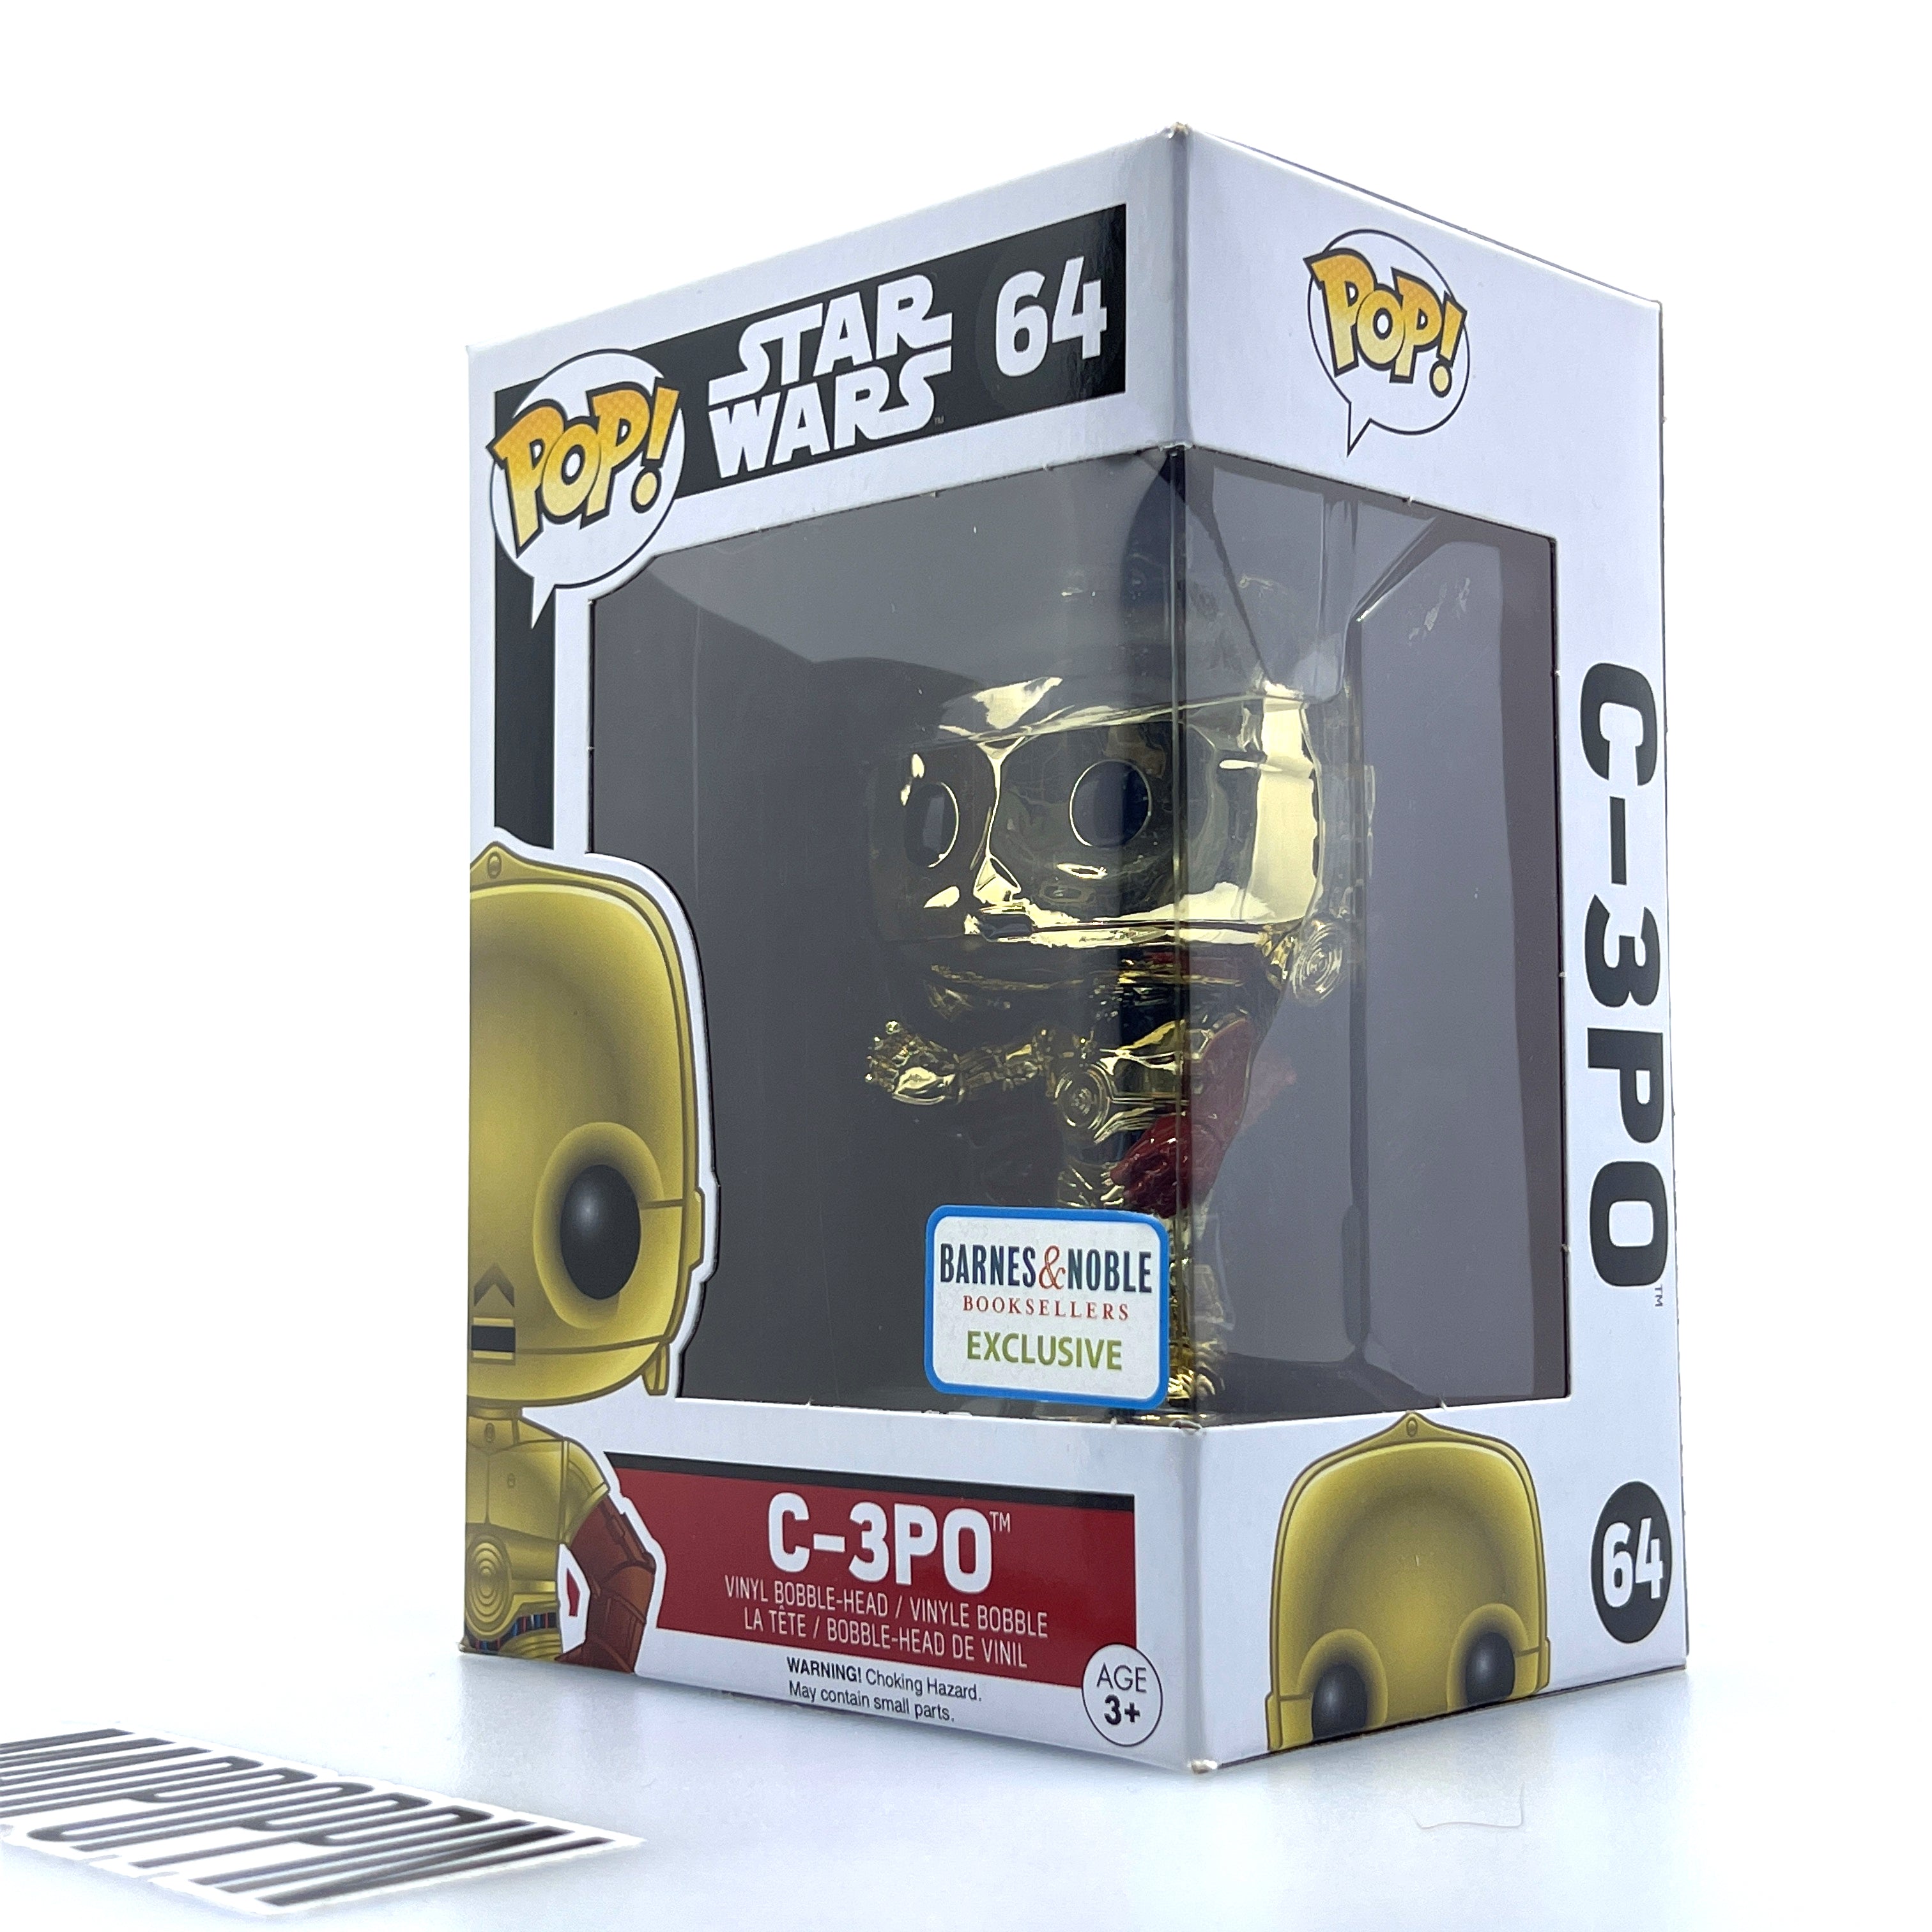 Funko Pop Star Wars The Force Awakens C-3PO Chrome Metallic Barnes & Noble 64